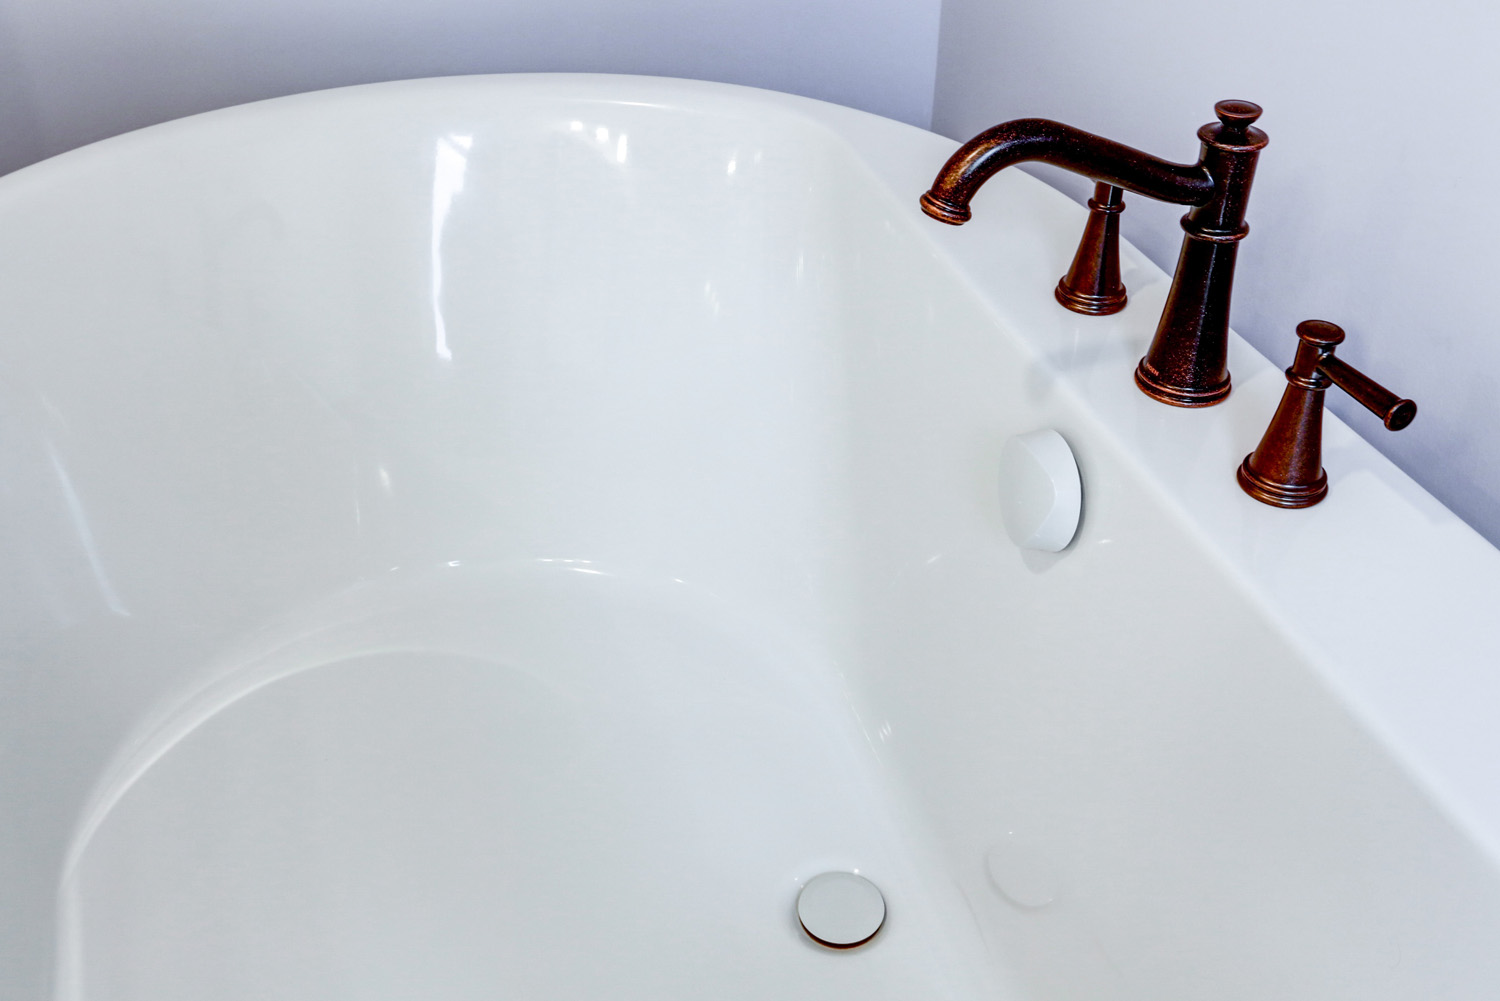 Oil Rubbed Bronze Bathtub Faucet in Millersville Remodel